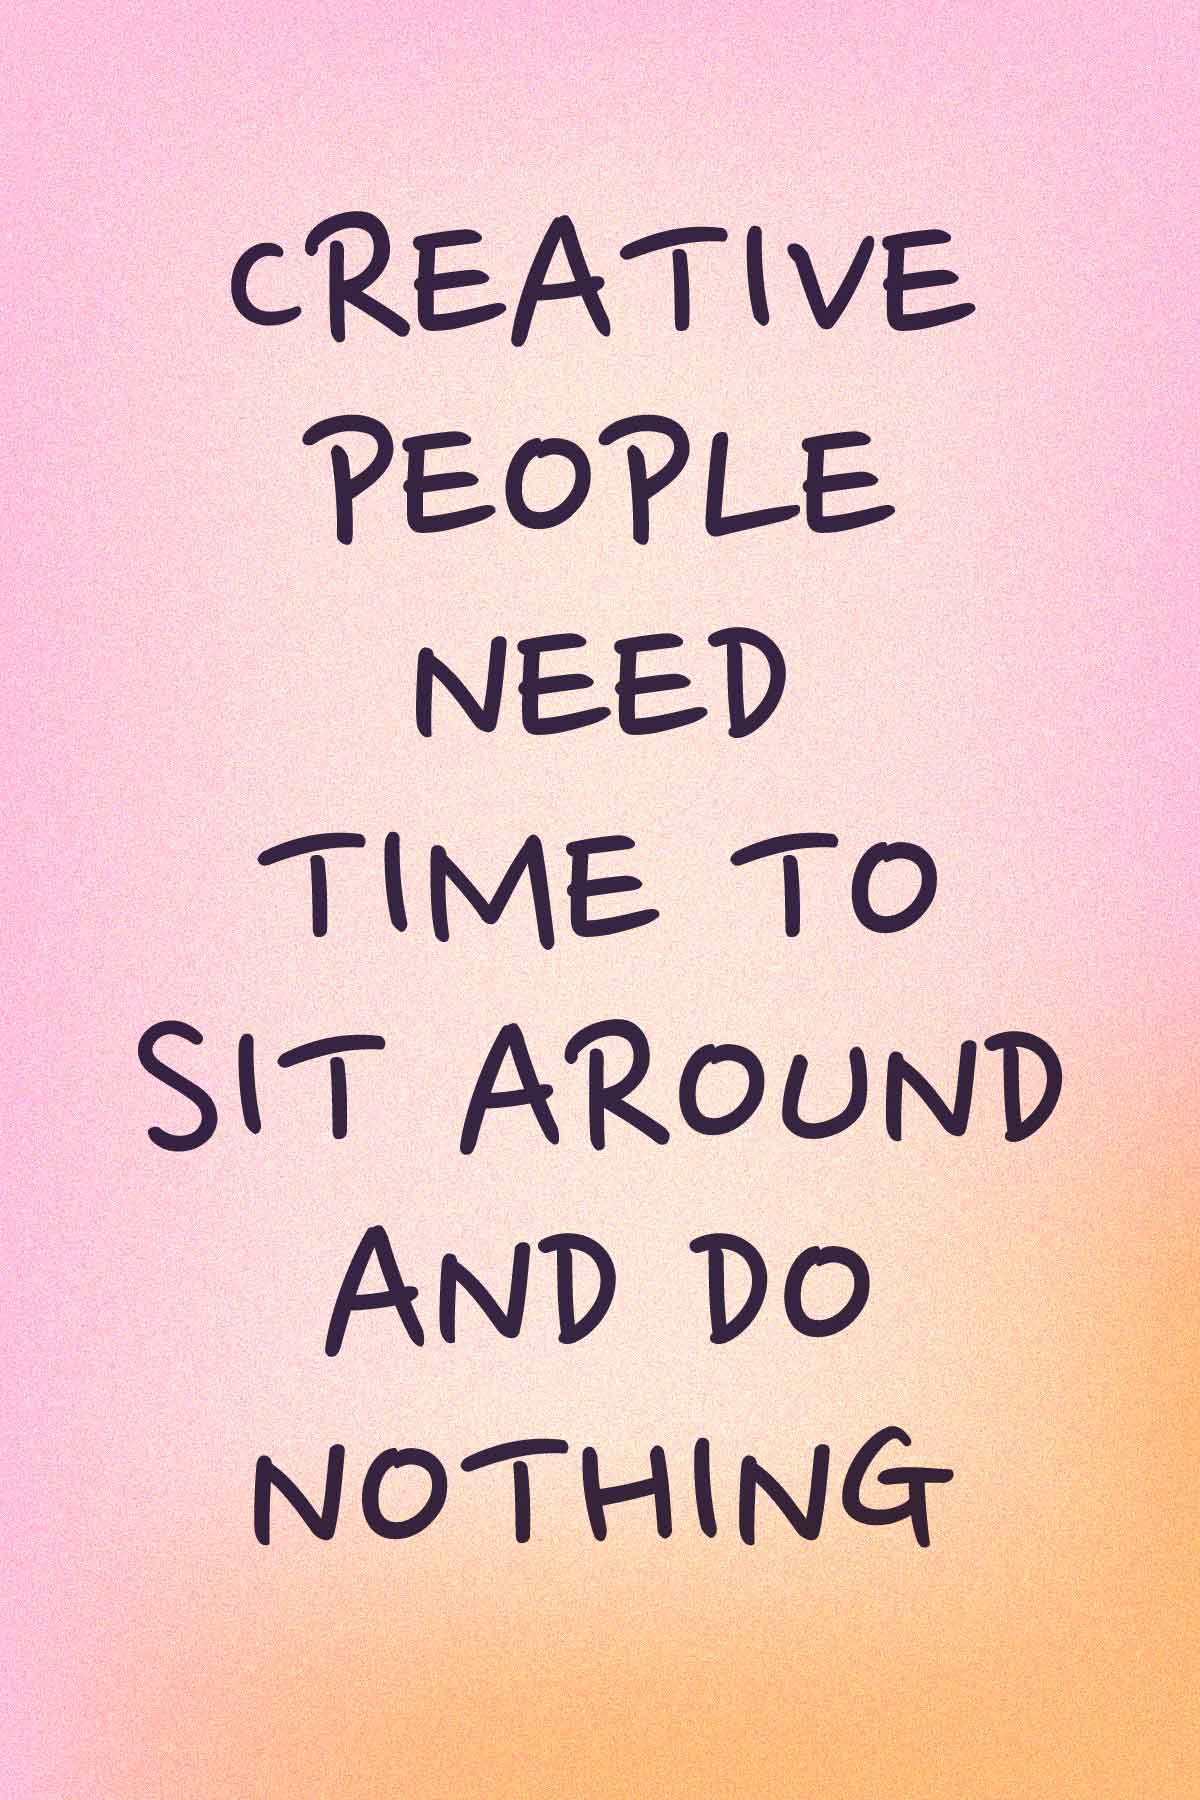 Creative people need time